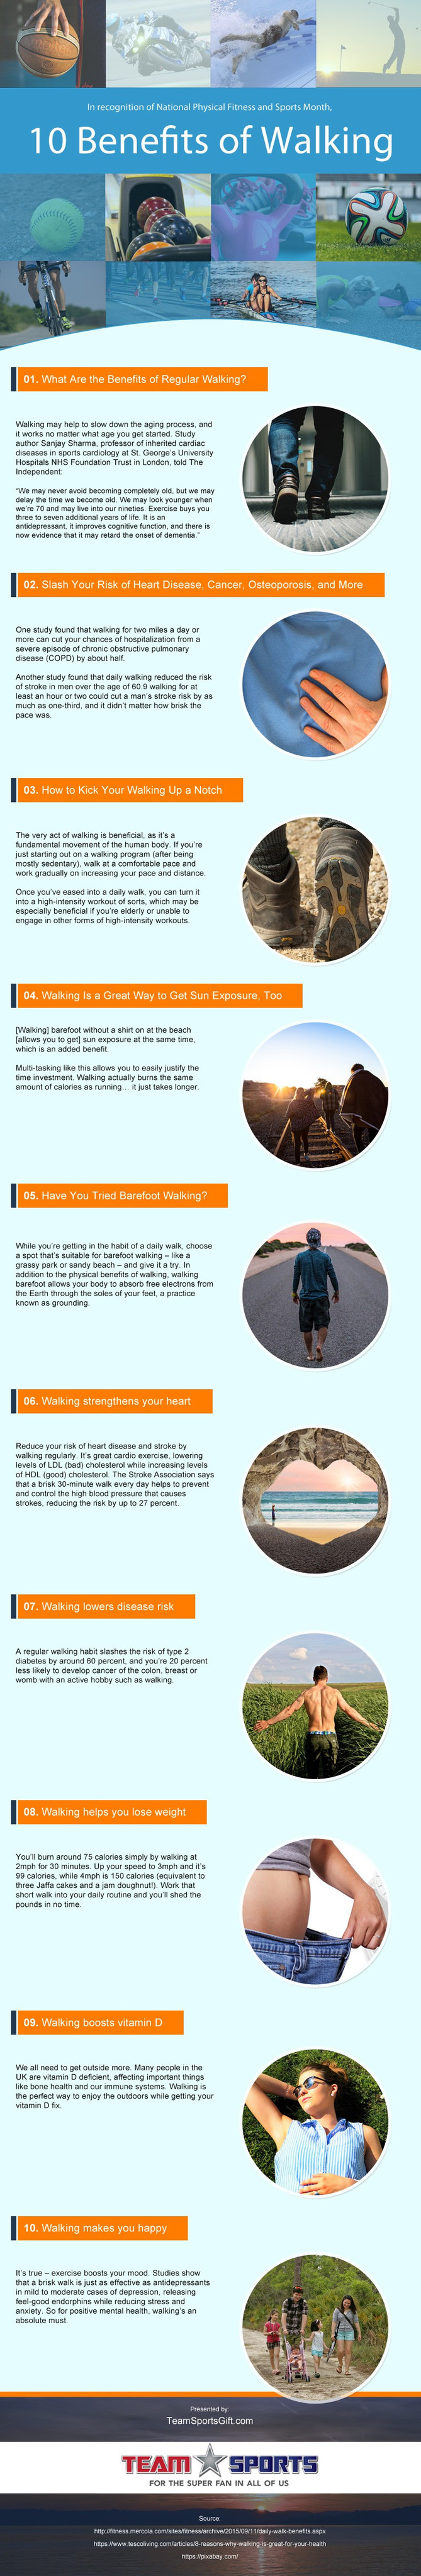 walking benefits infographic